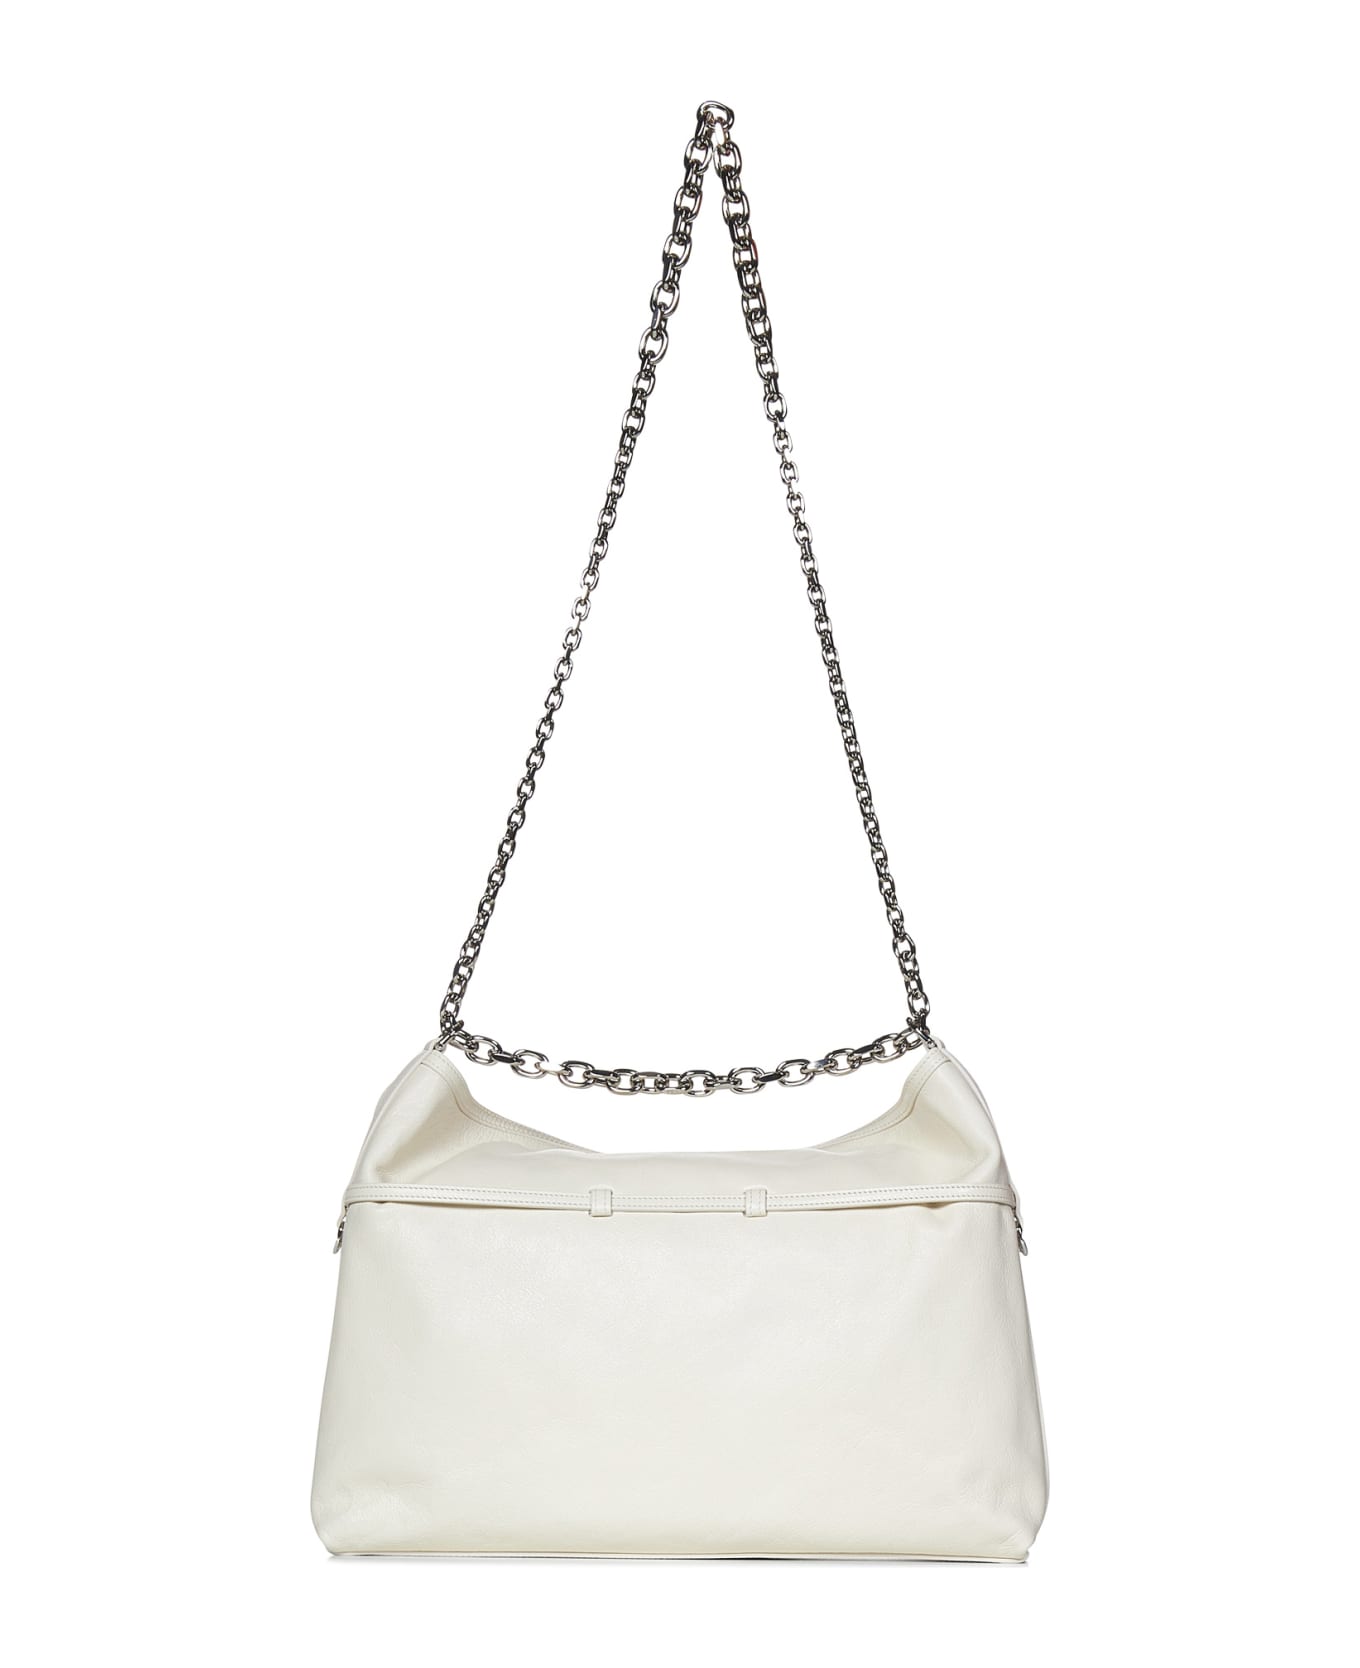 Givenchy Voyou Chain Medium Shoulder Bag - White